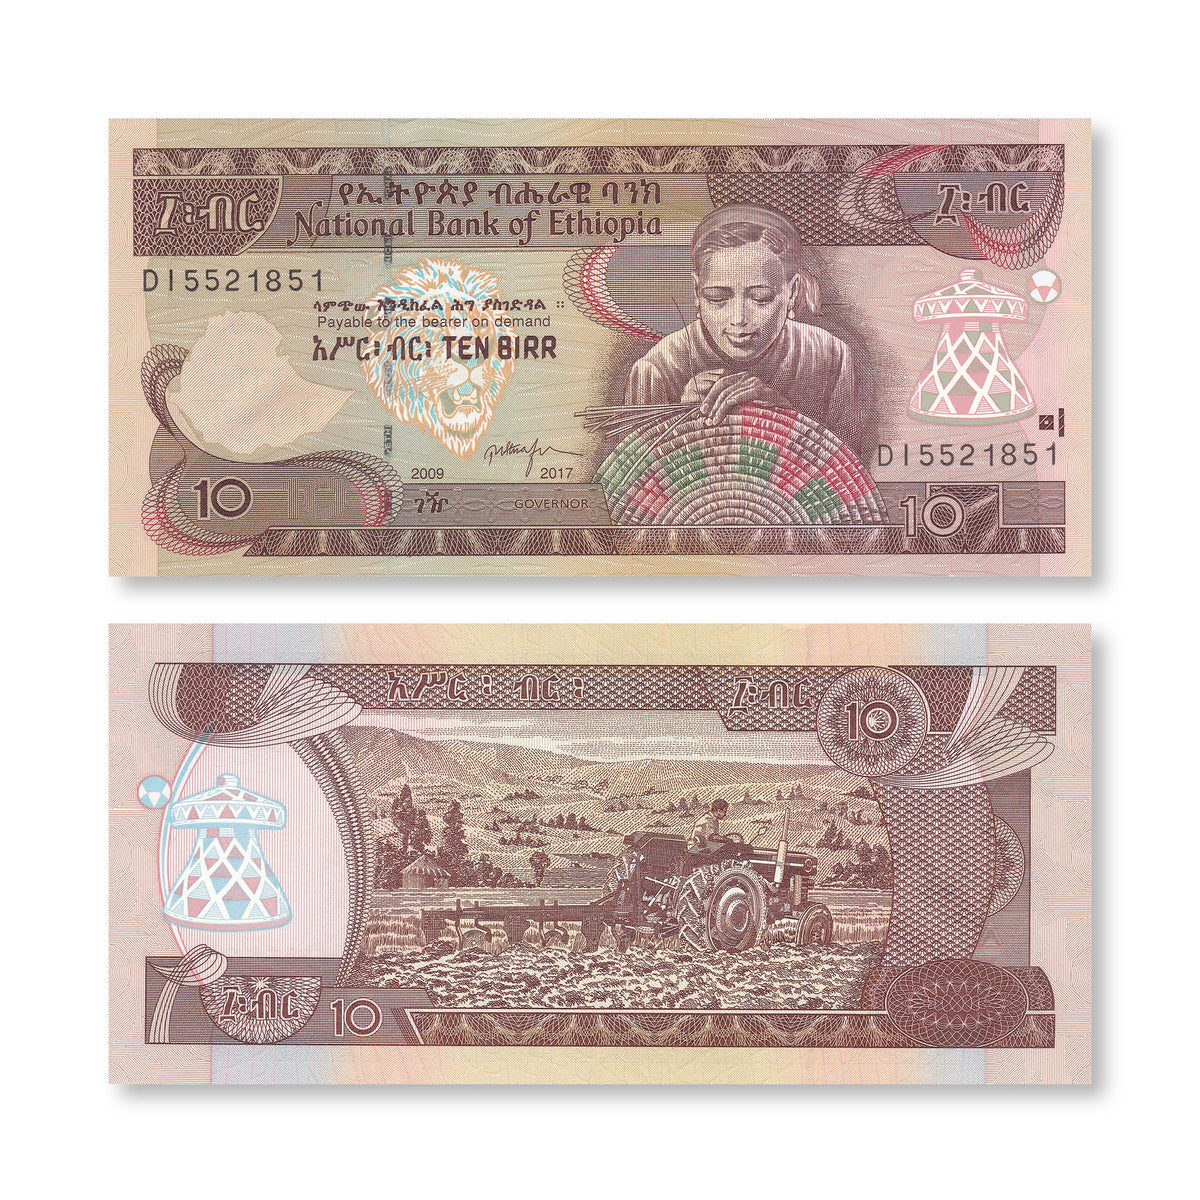 Ethiopia 10 Birr, 2009/2017, B332e, P48g, UNC - Robert's World Money - World Banknotes